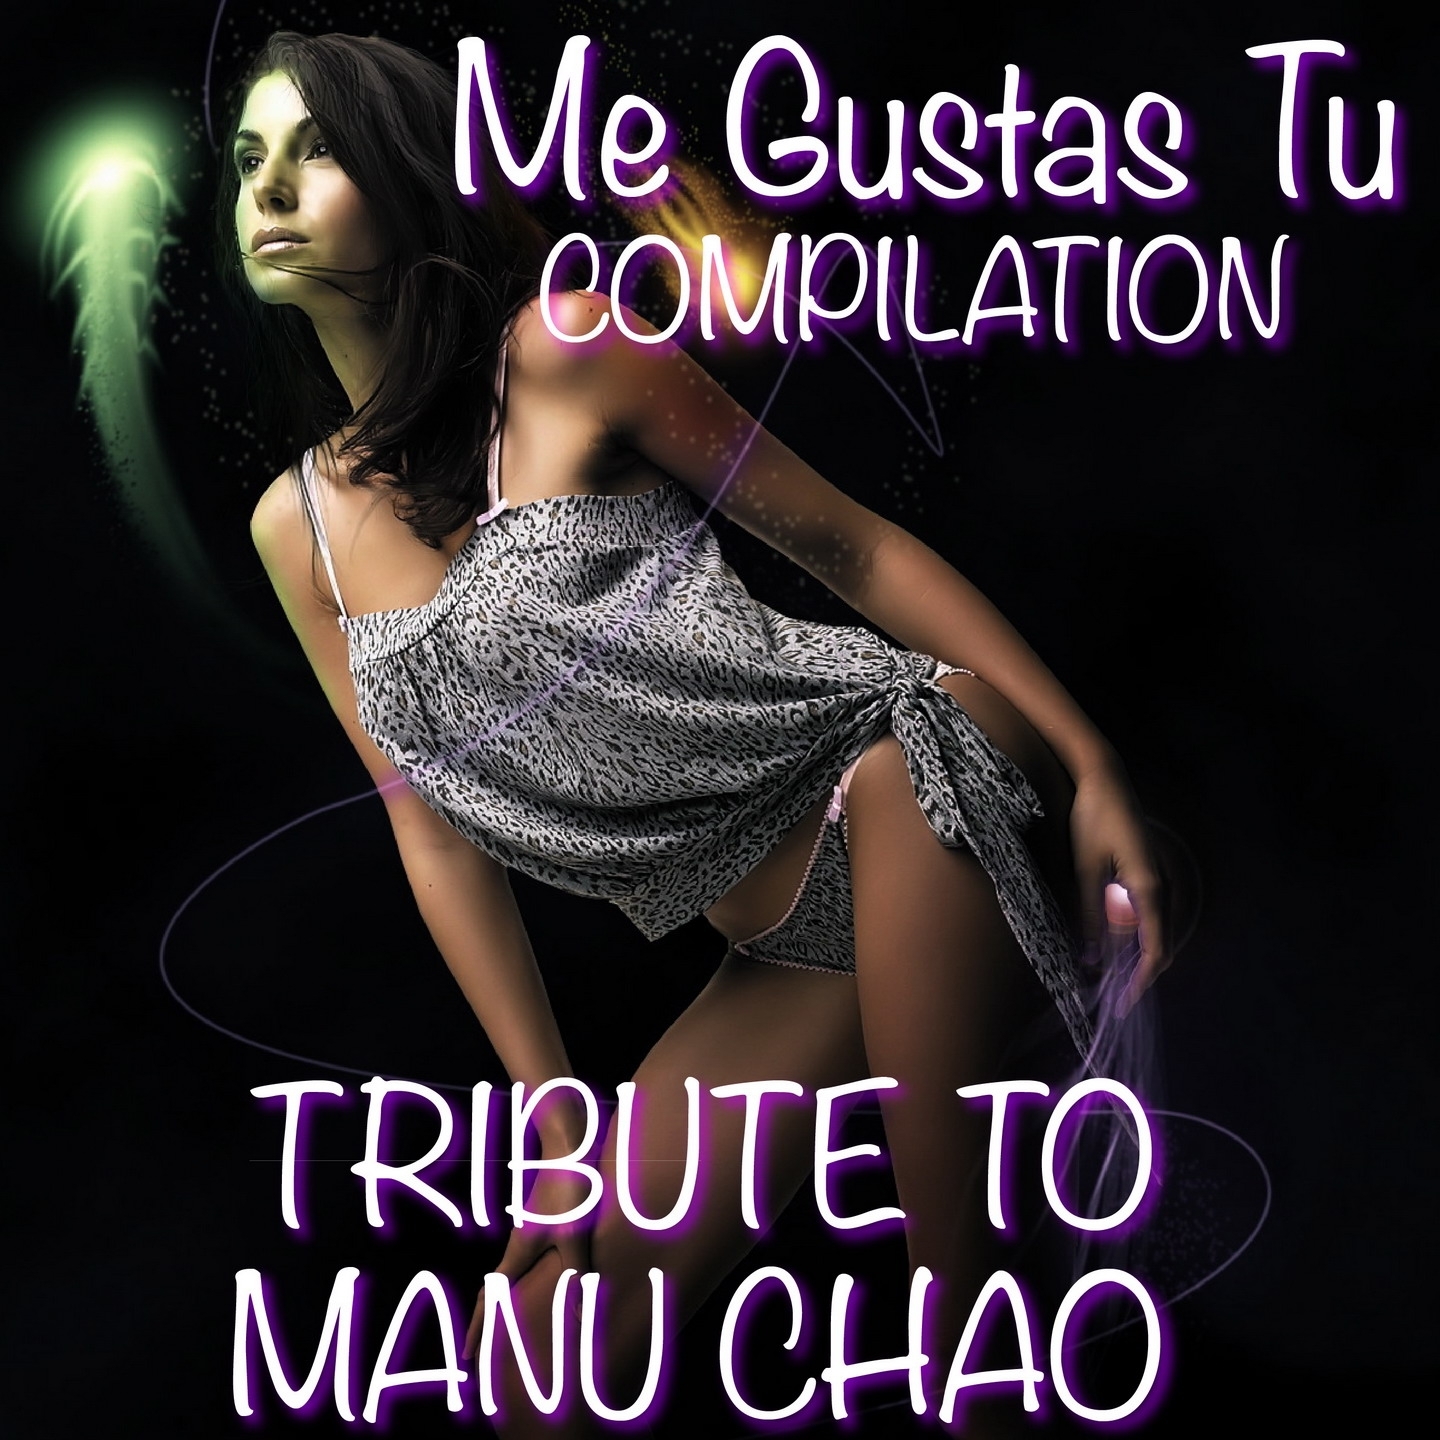 Me Gustas Tu Compilation Tribute to Manu Chao